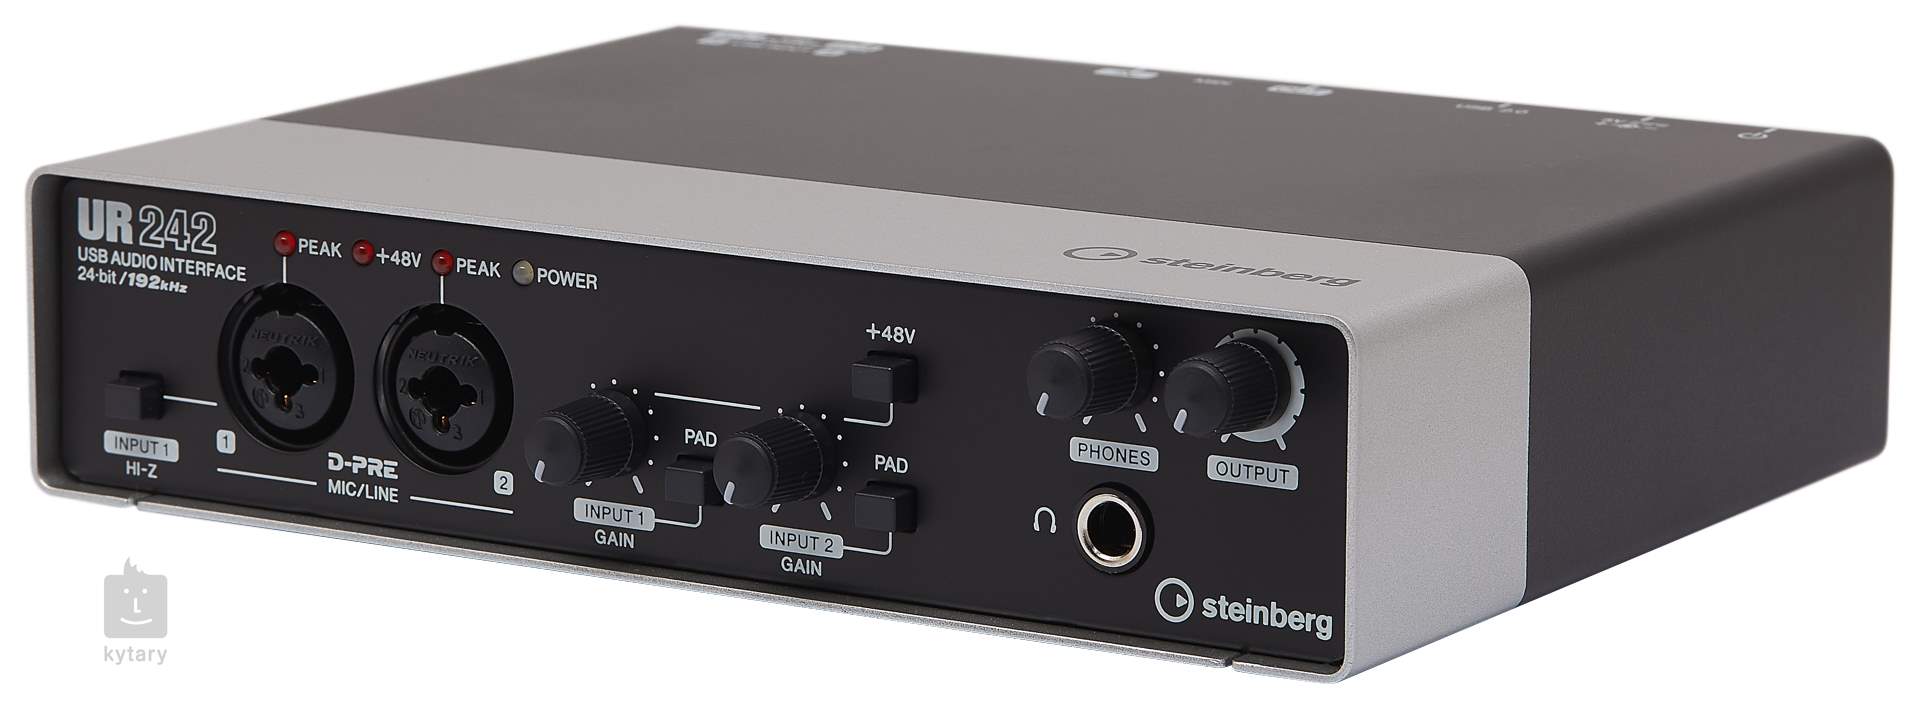 STEINBERG UR242 USB Audio Interface